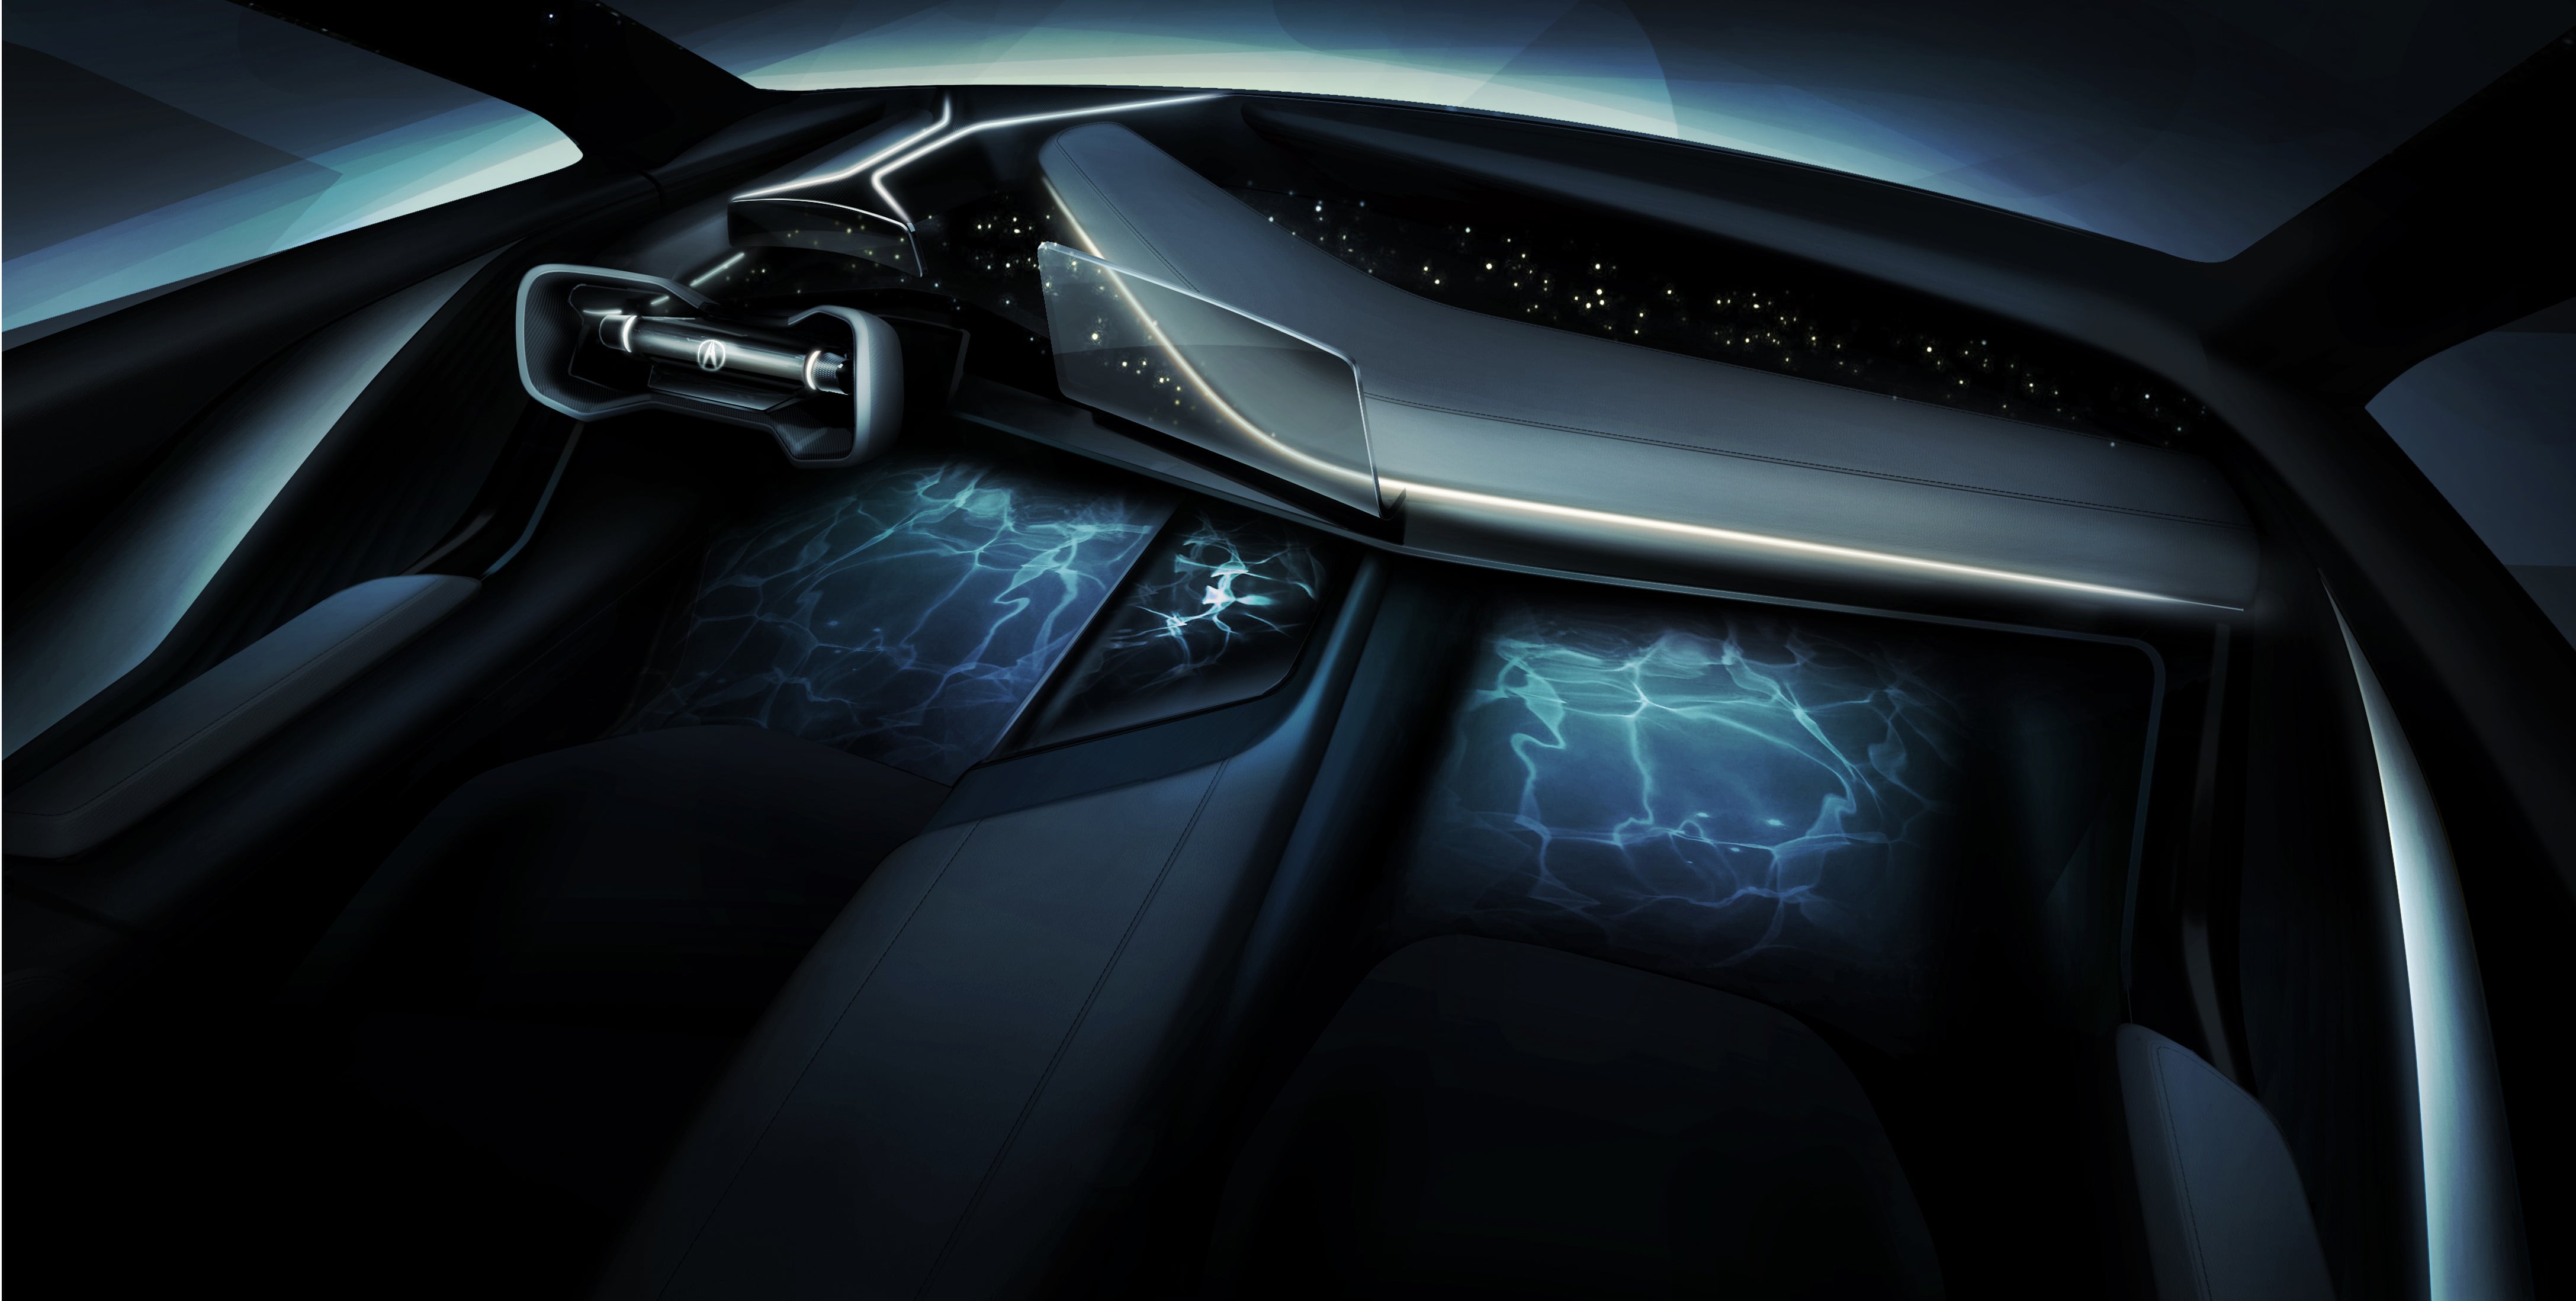 Acura Precision EV Concept Shows How Acura’s Electric Future Will Look